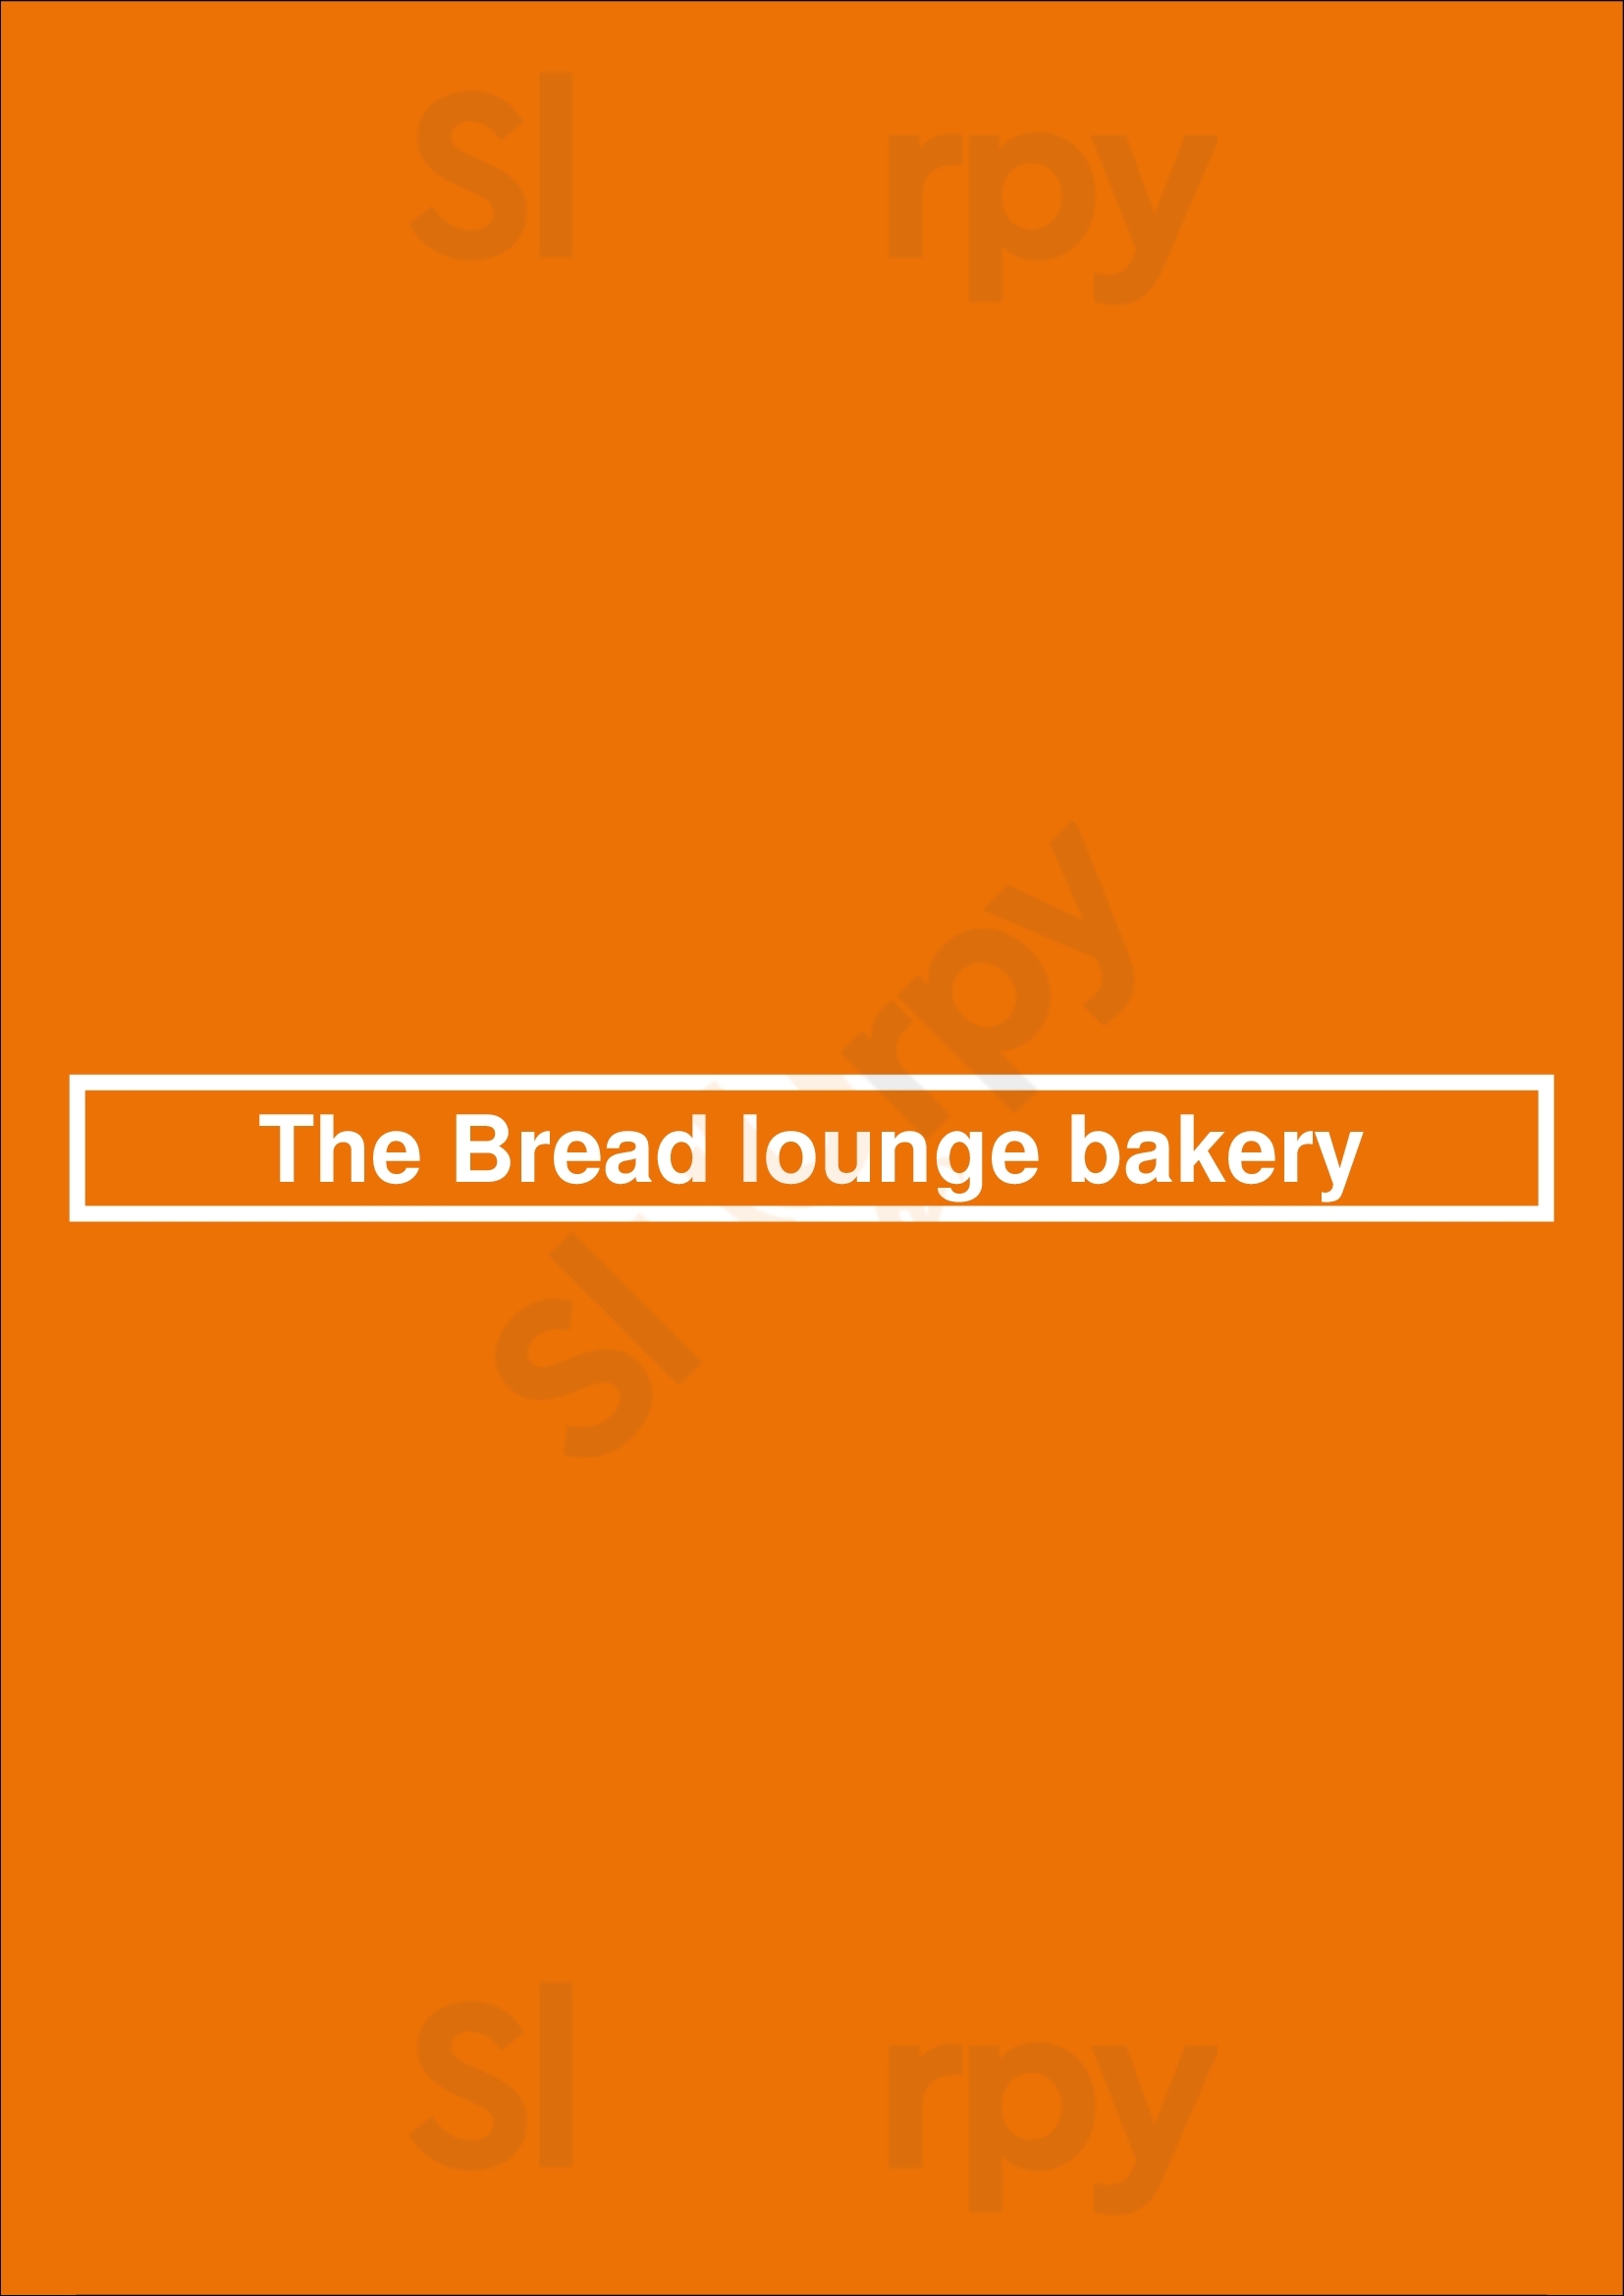 The Bread Lounge Bakery Halifax Menu - 1